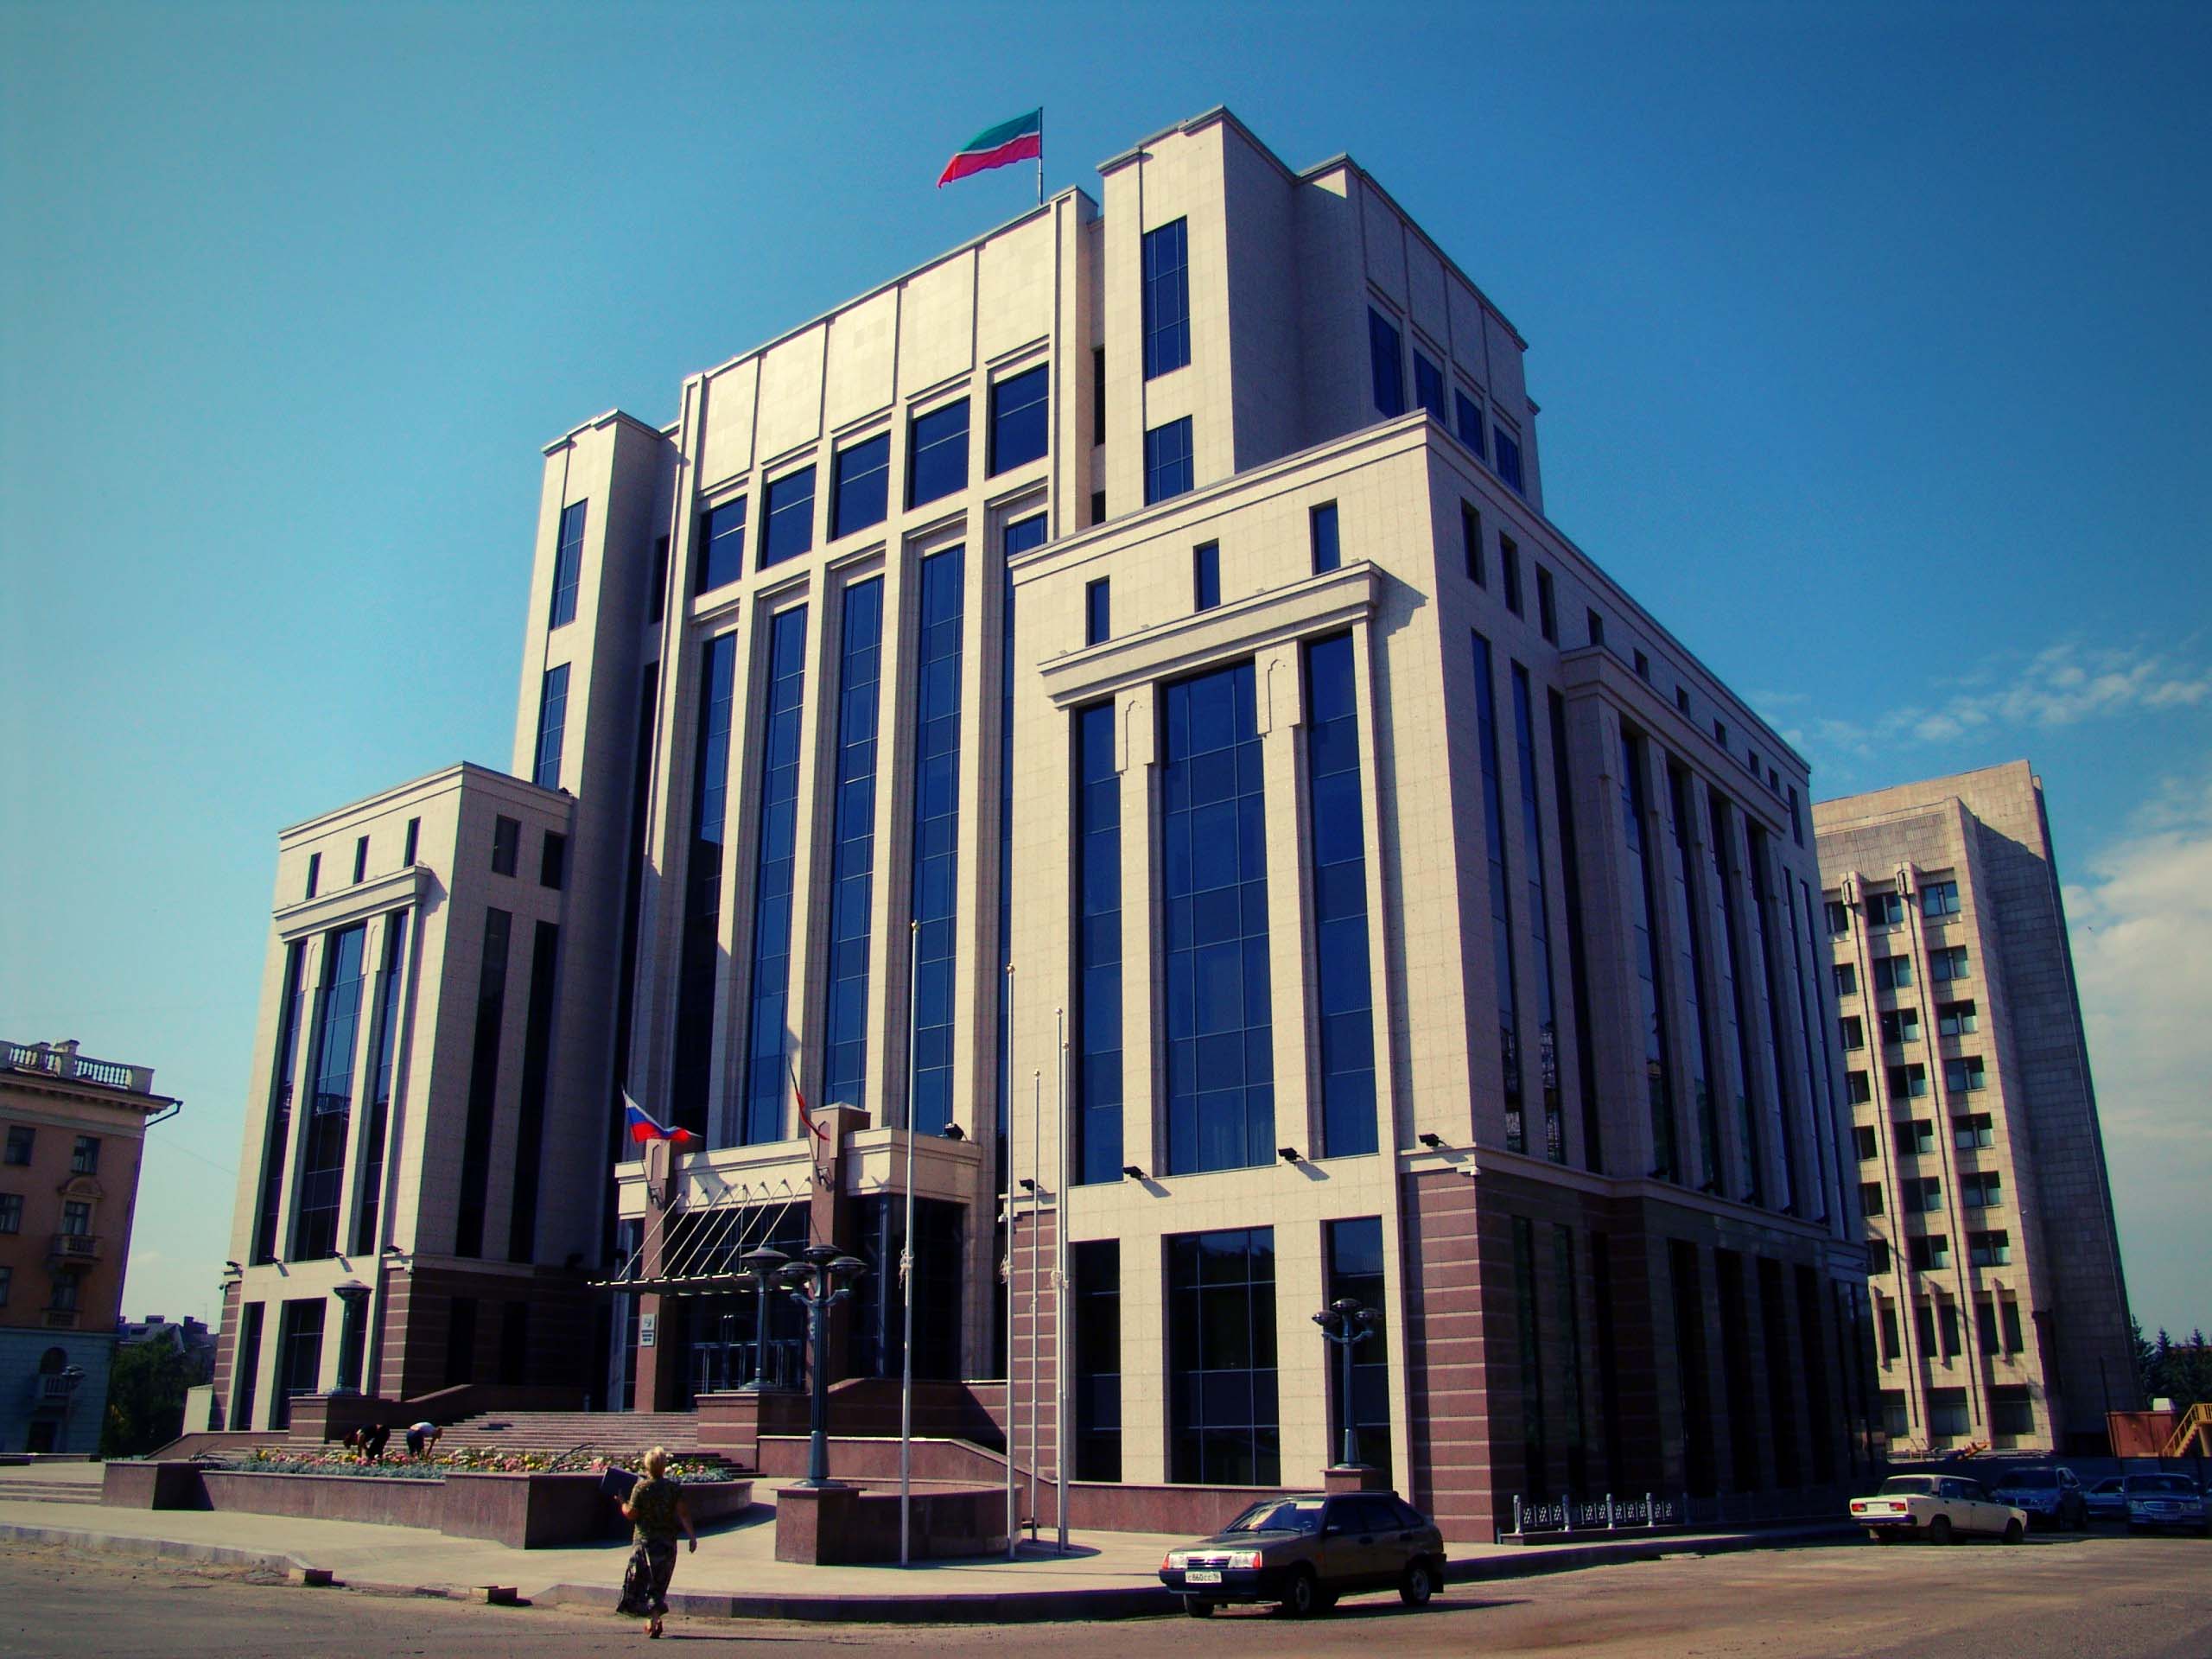 Repulic of Tatarstan Prime Ministry Building